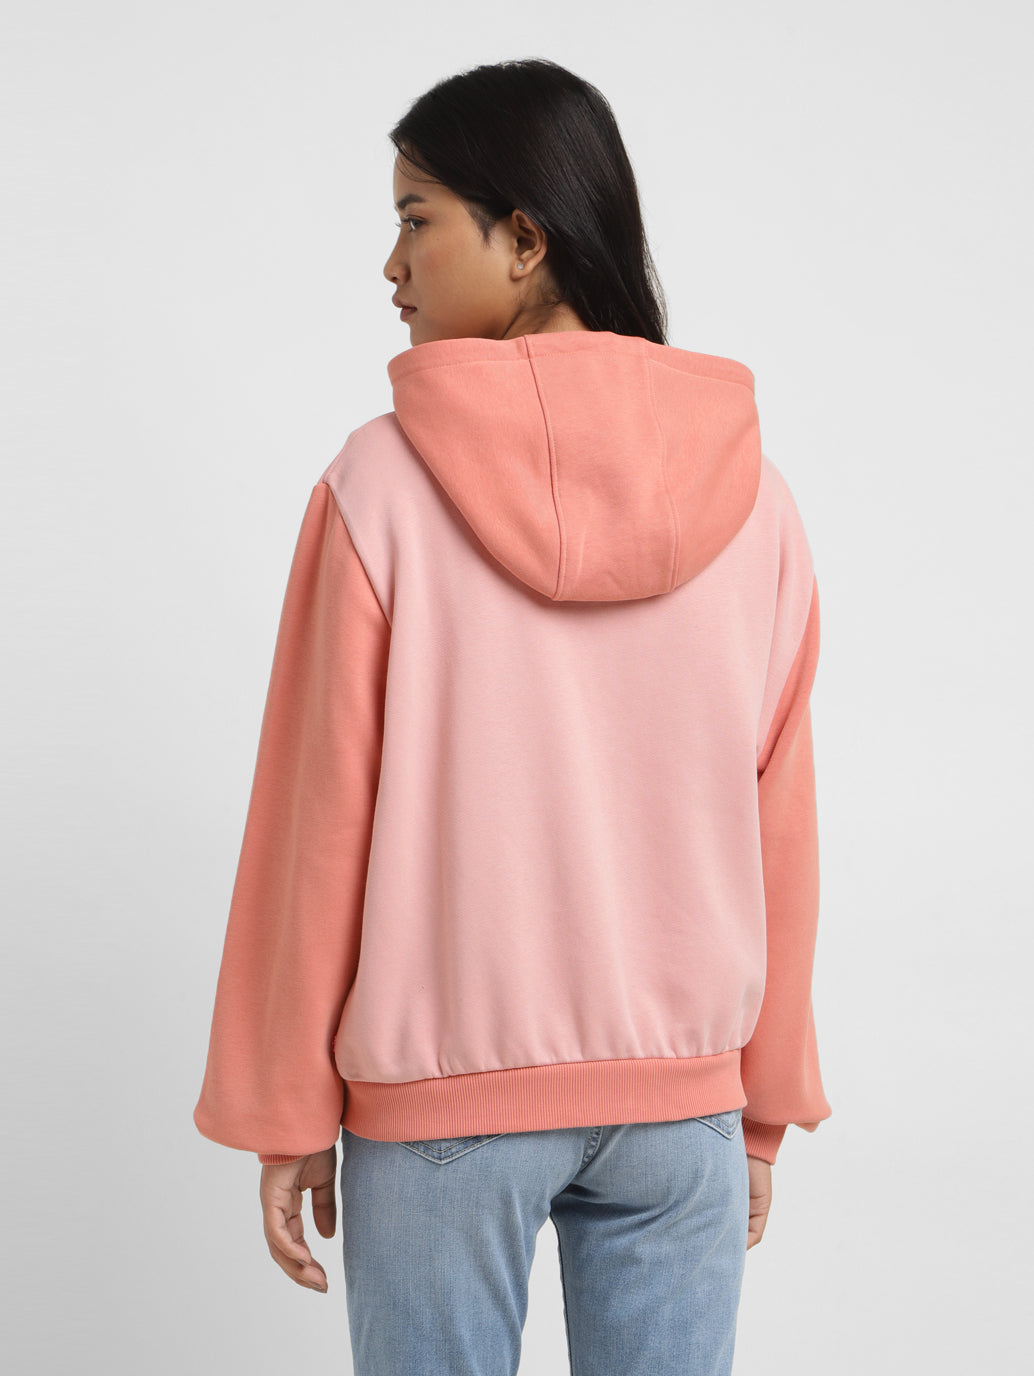 Women's Colorblock Orange Hooded Sweatshirt